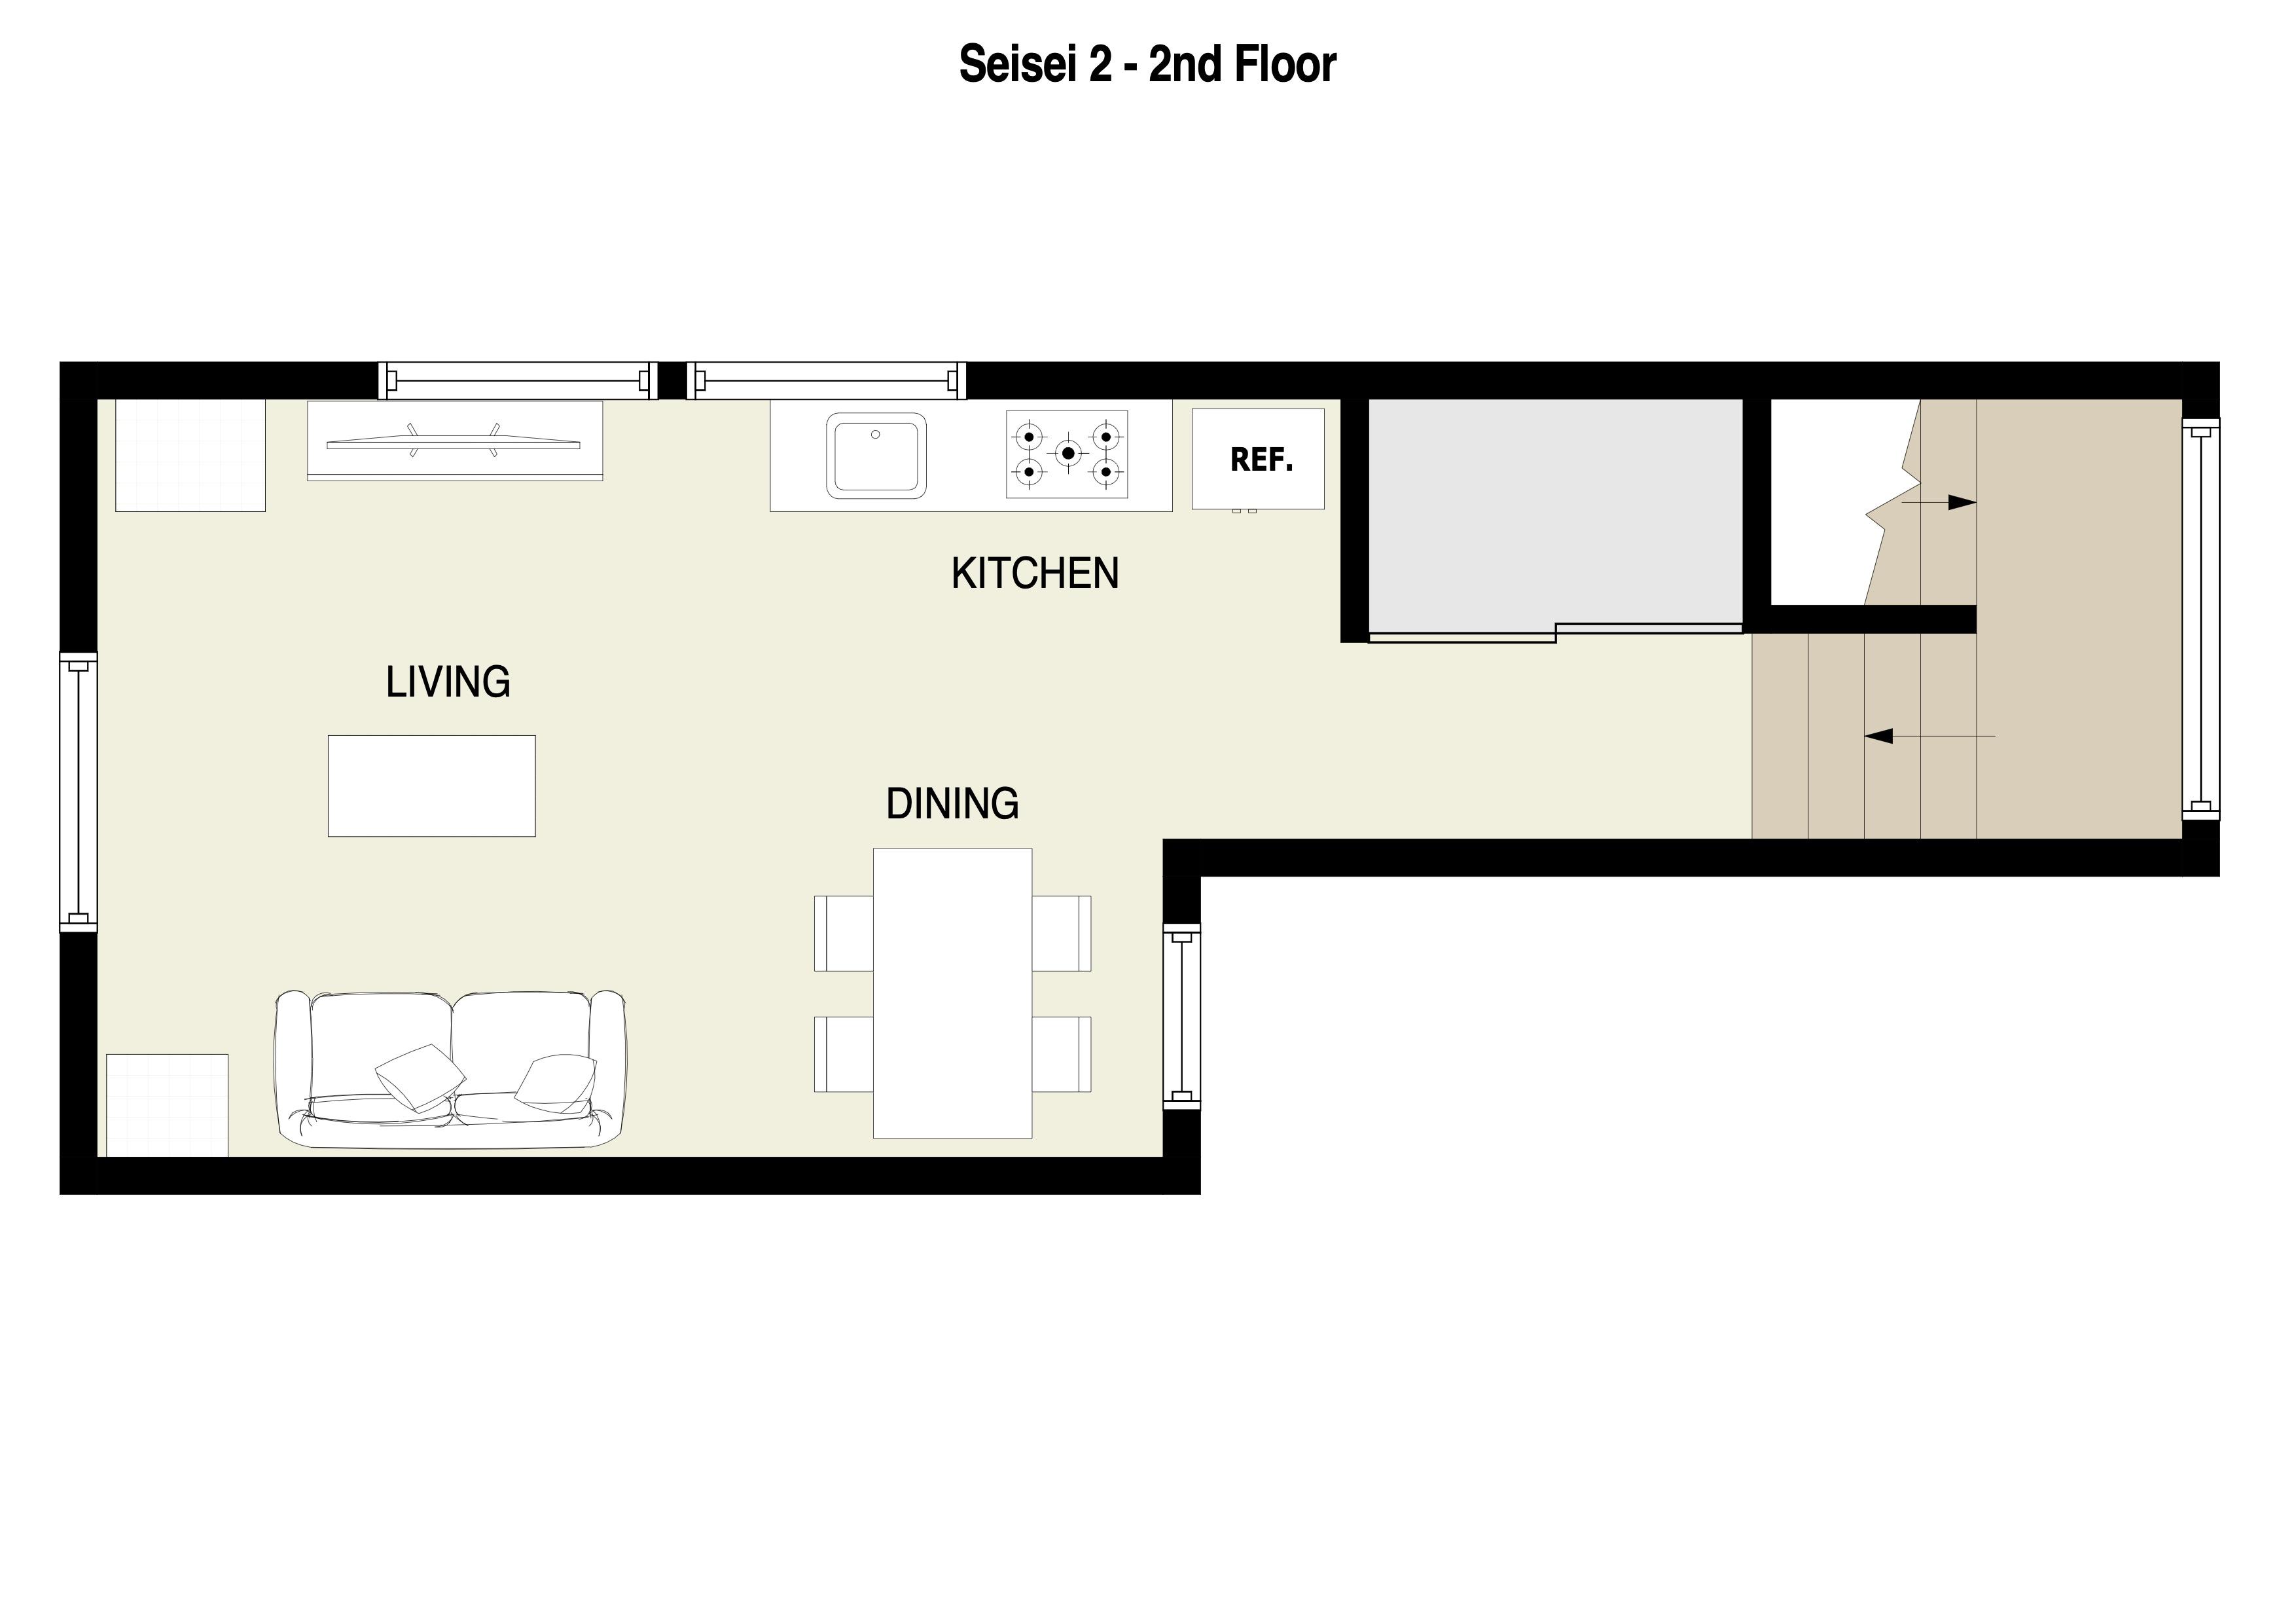 Seisei 2 2nd floor plans